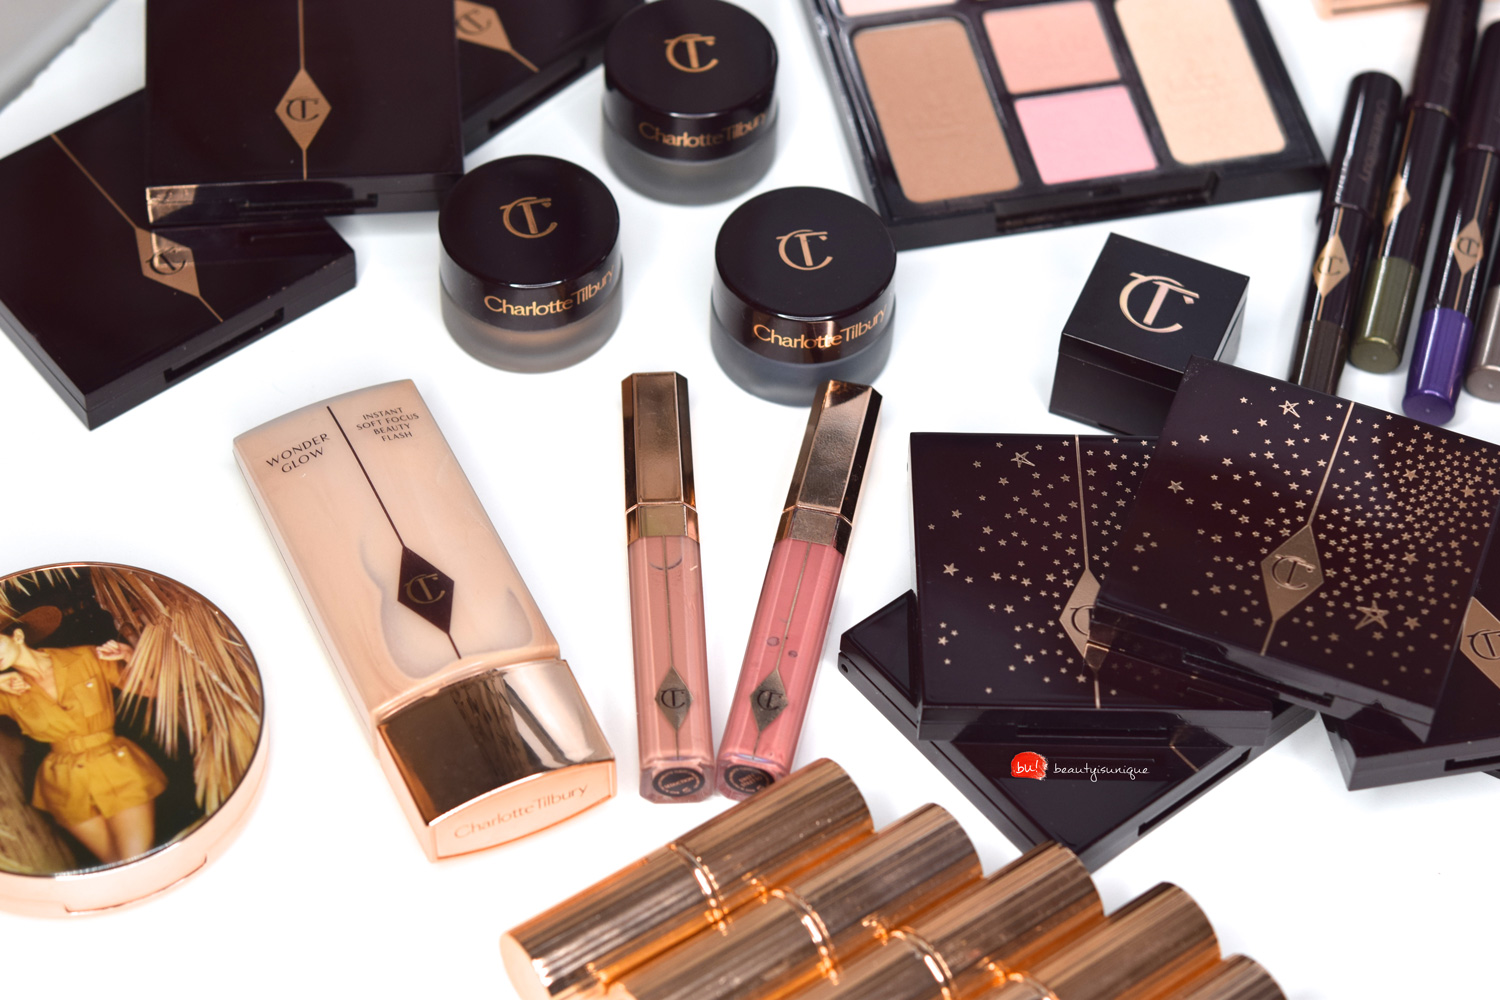 Charlotte-tilbury-cosmetics